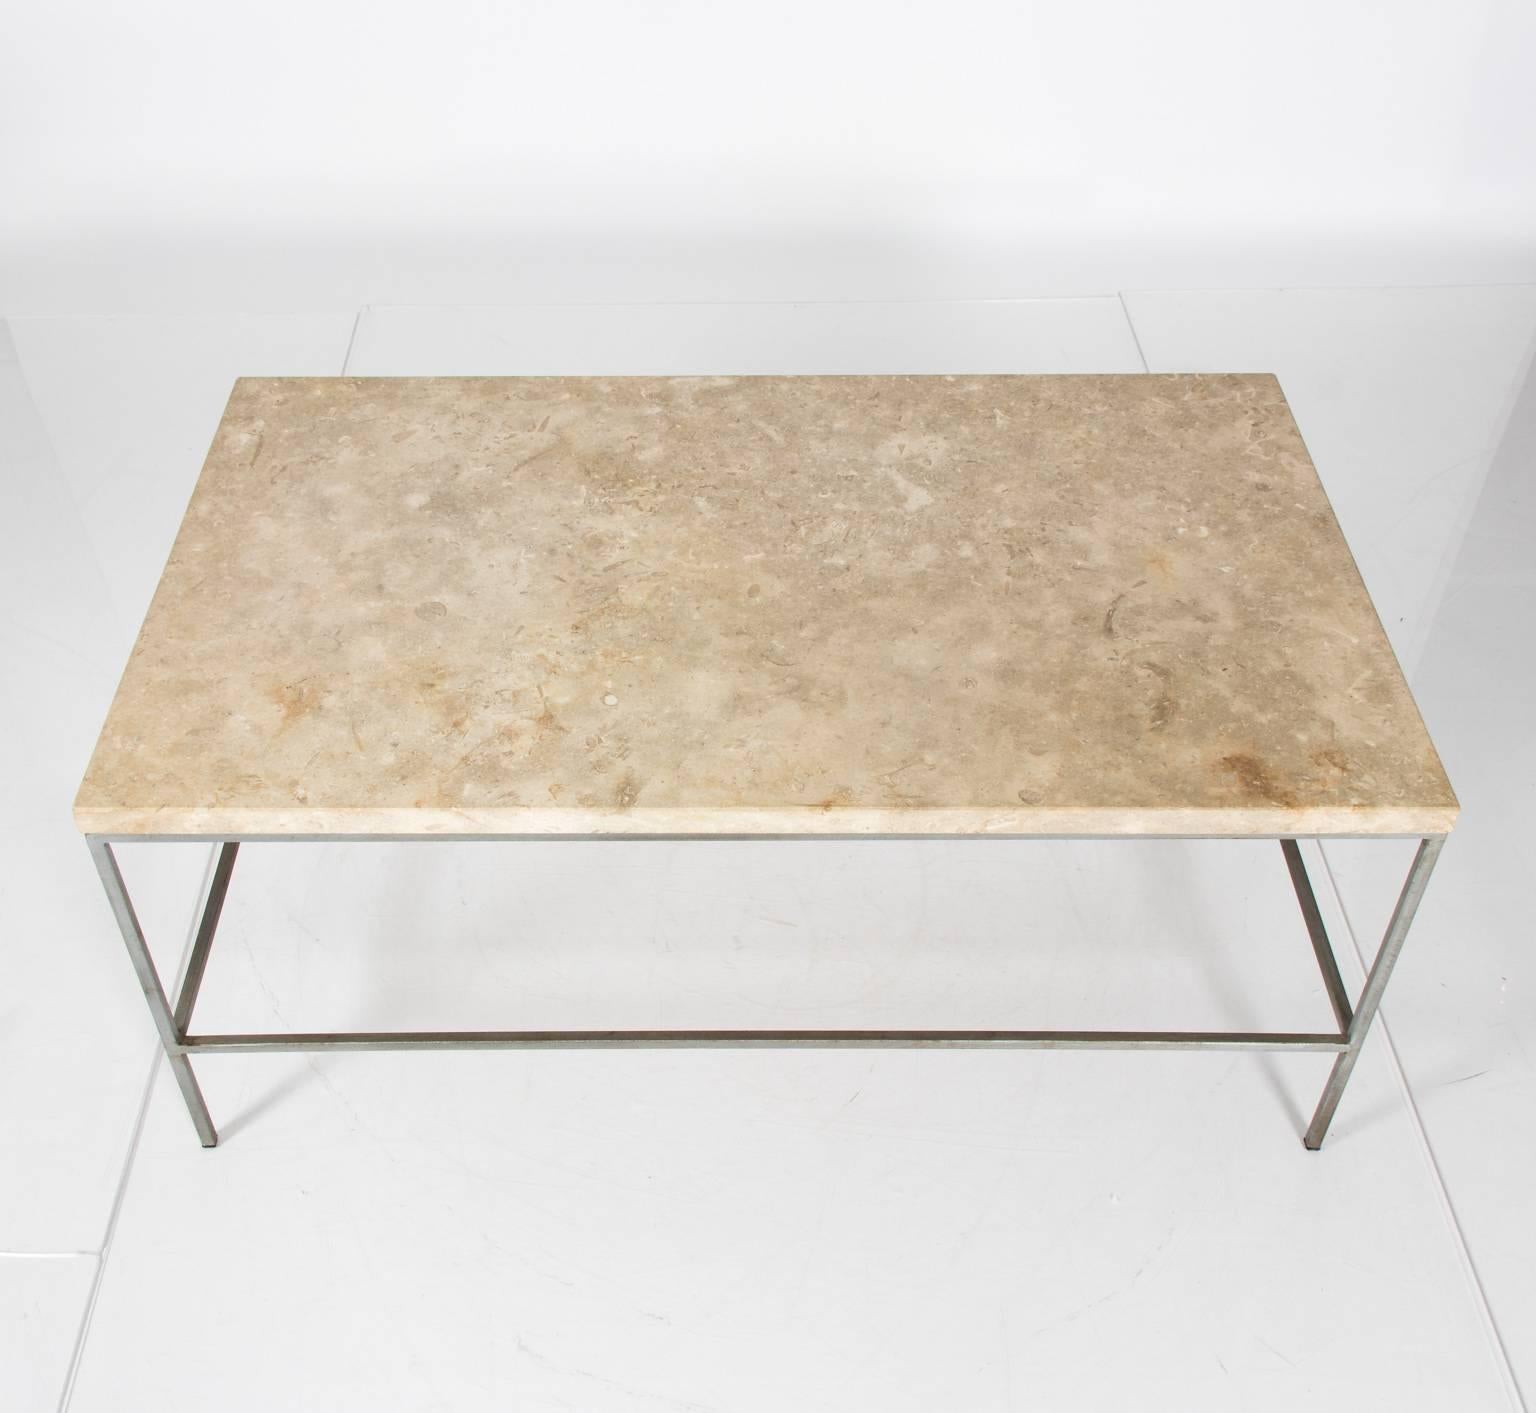 Steel coffee table, circa mid-20th century.
 